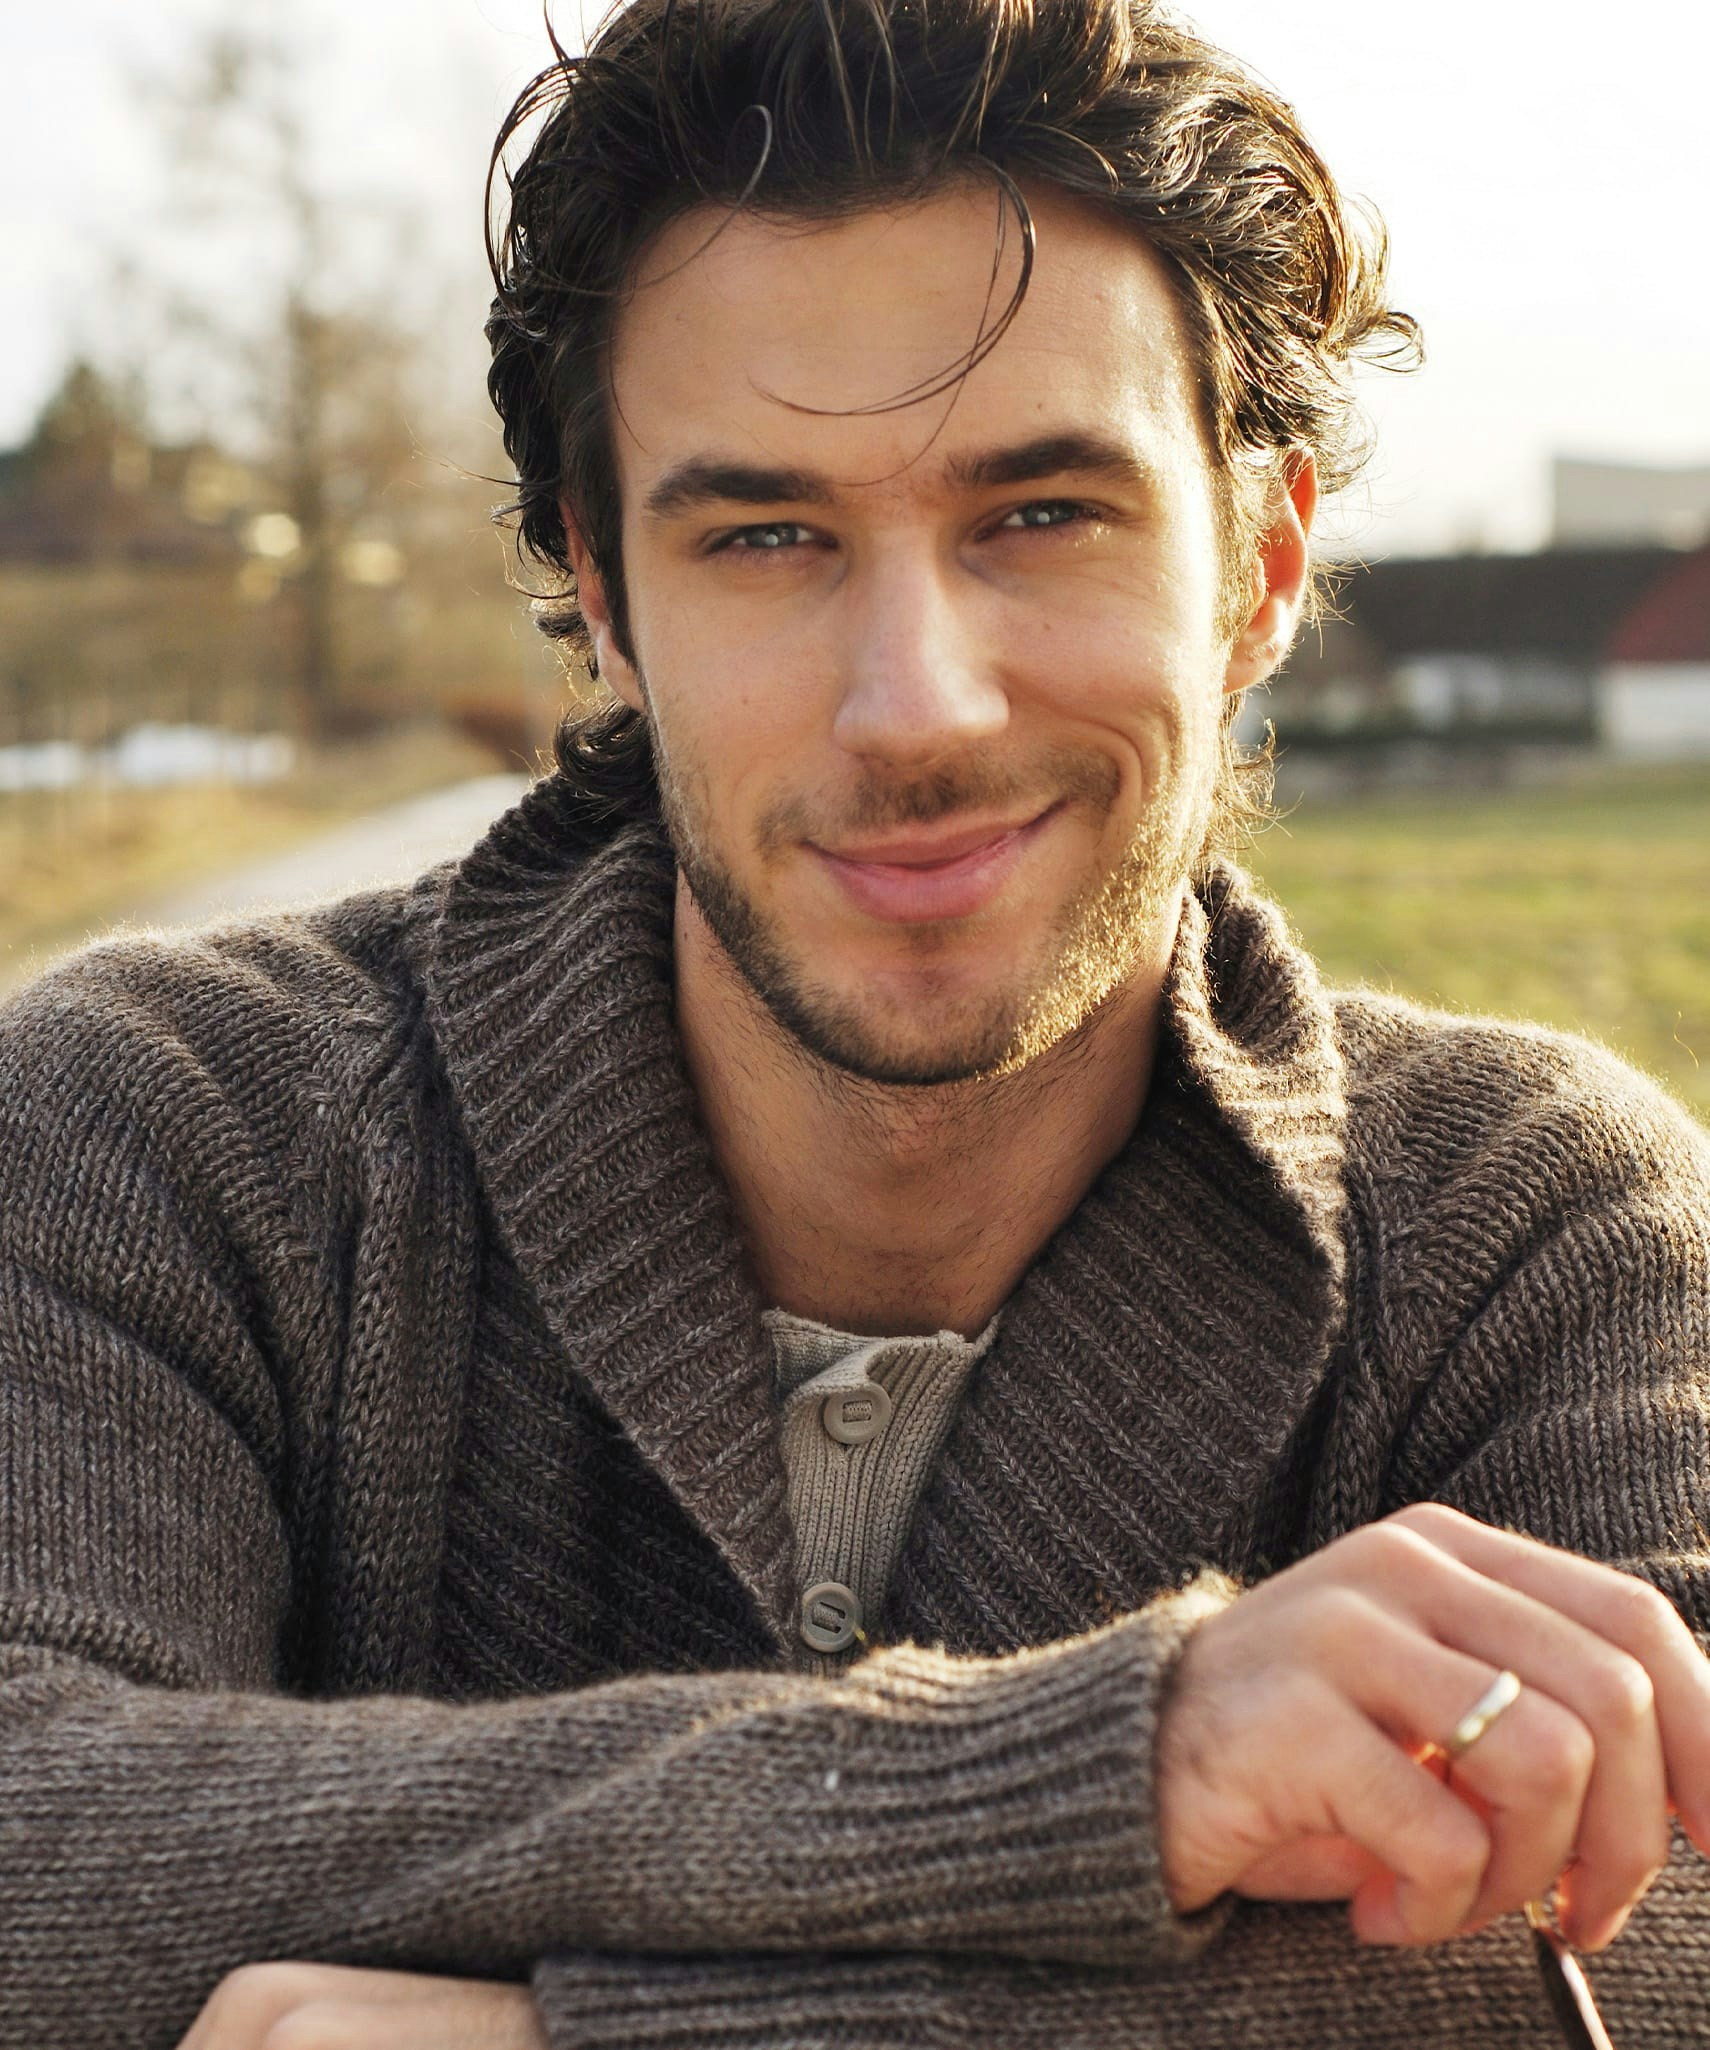 Smiling man in grey sweater.